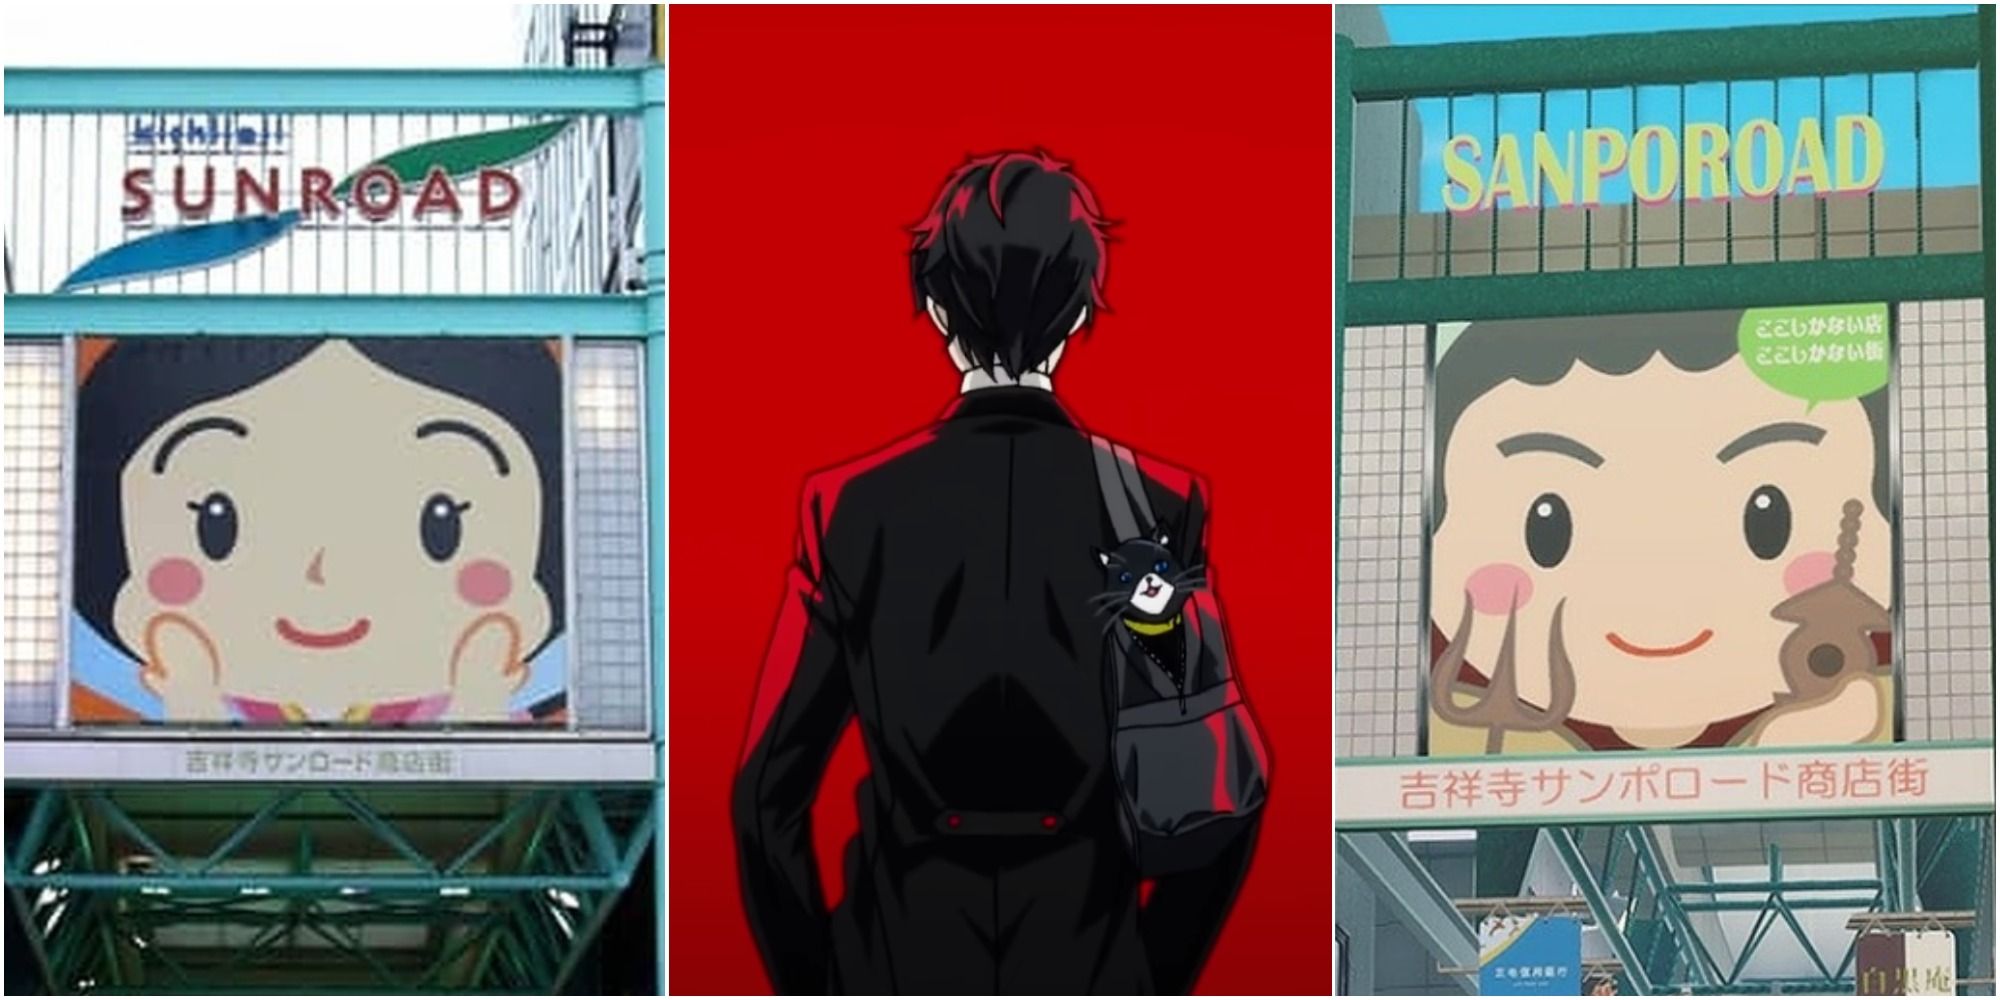 Split image Real-world Kichijoji Sun Road, Joker in Persona 5 Royal, and Kichijoji Sun Road in Persona 5 Royal